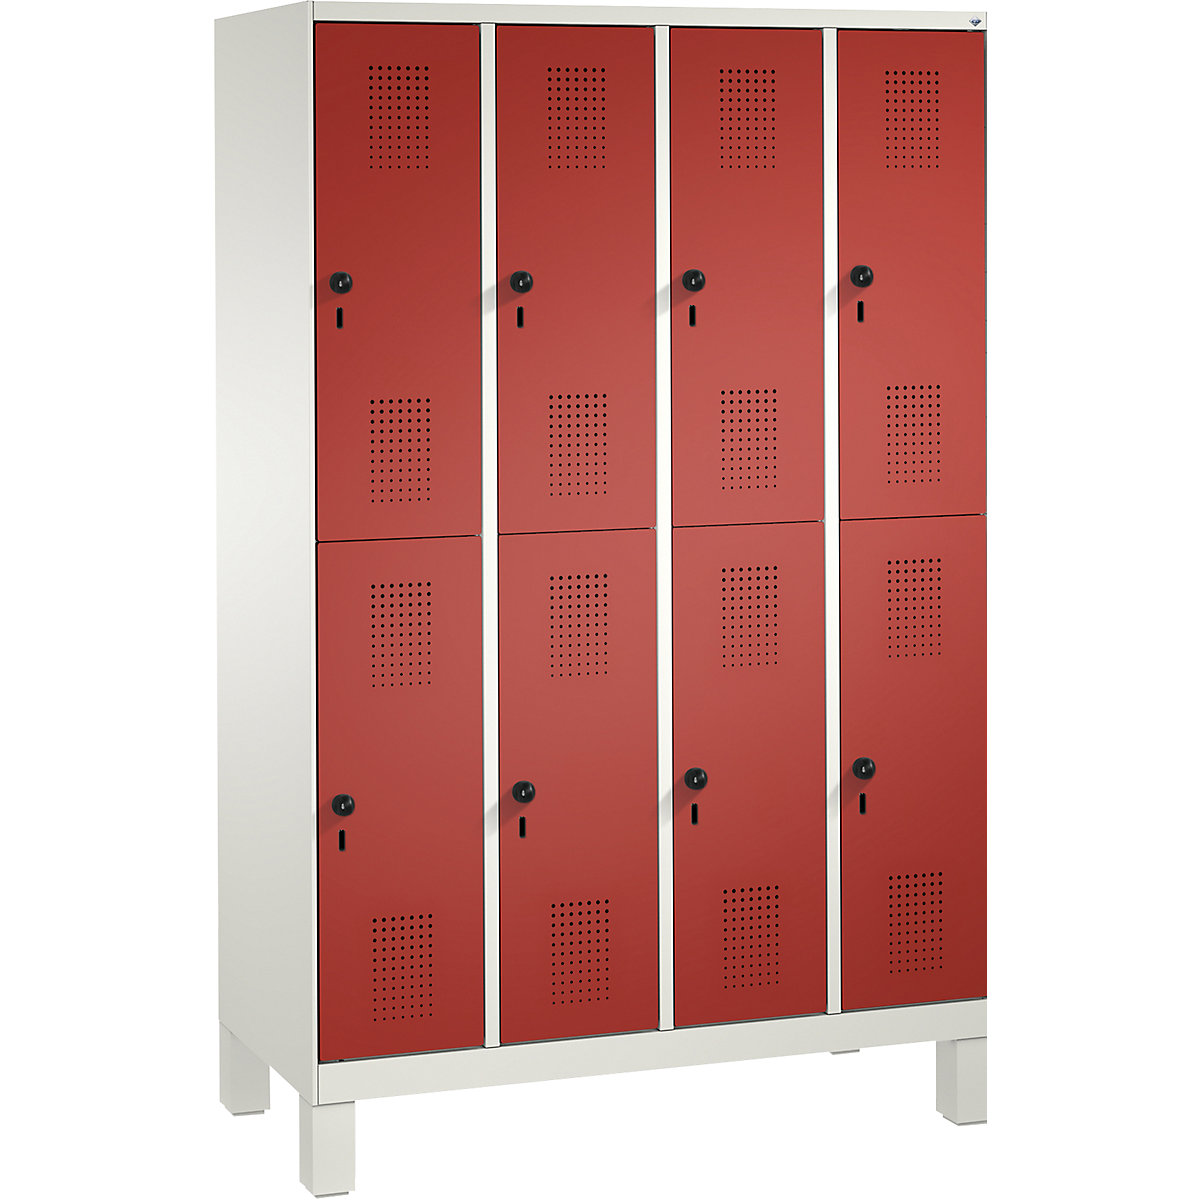 EVOLO cloakroom locker, double tier, with feet – C+P